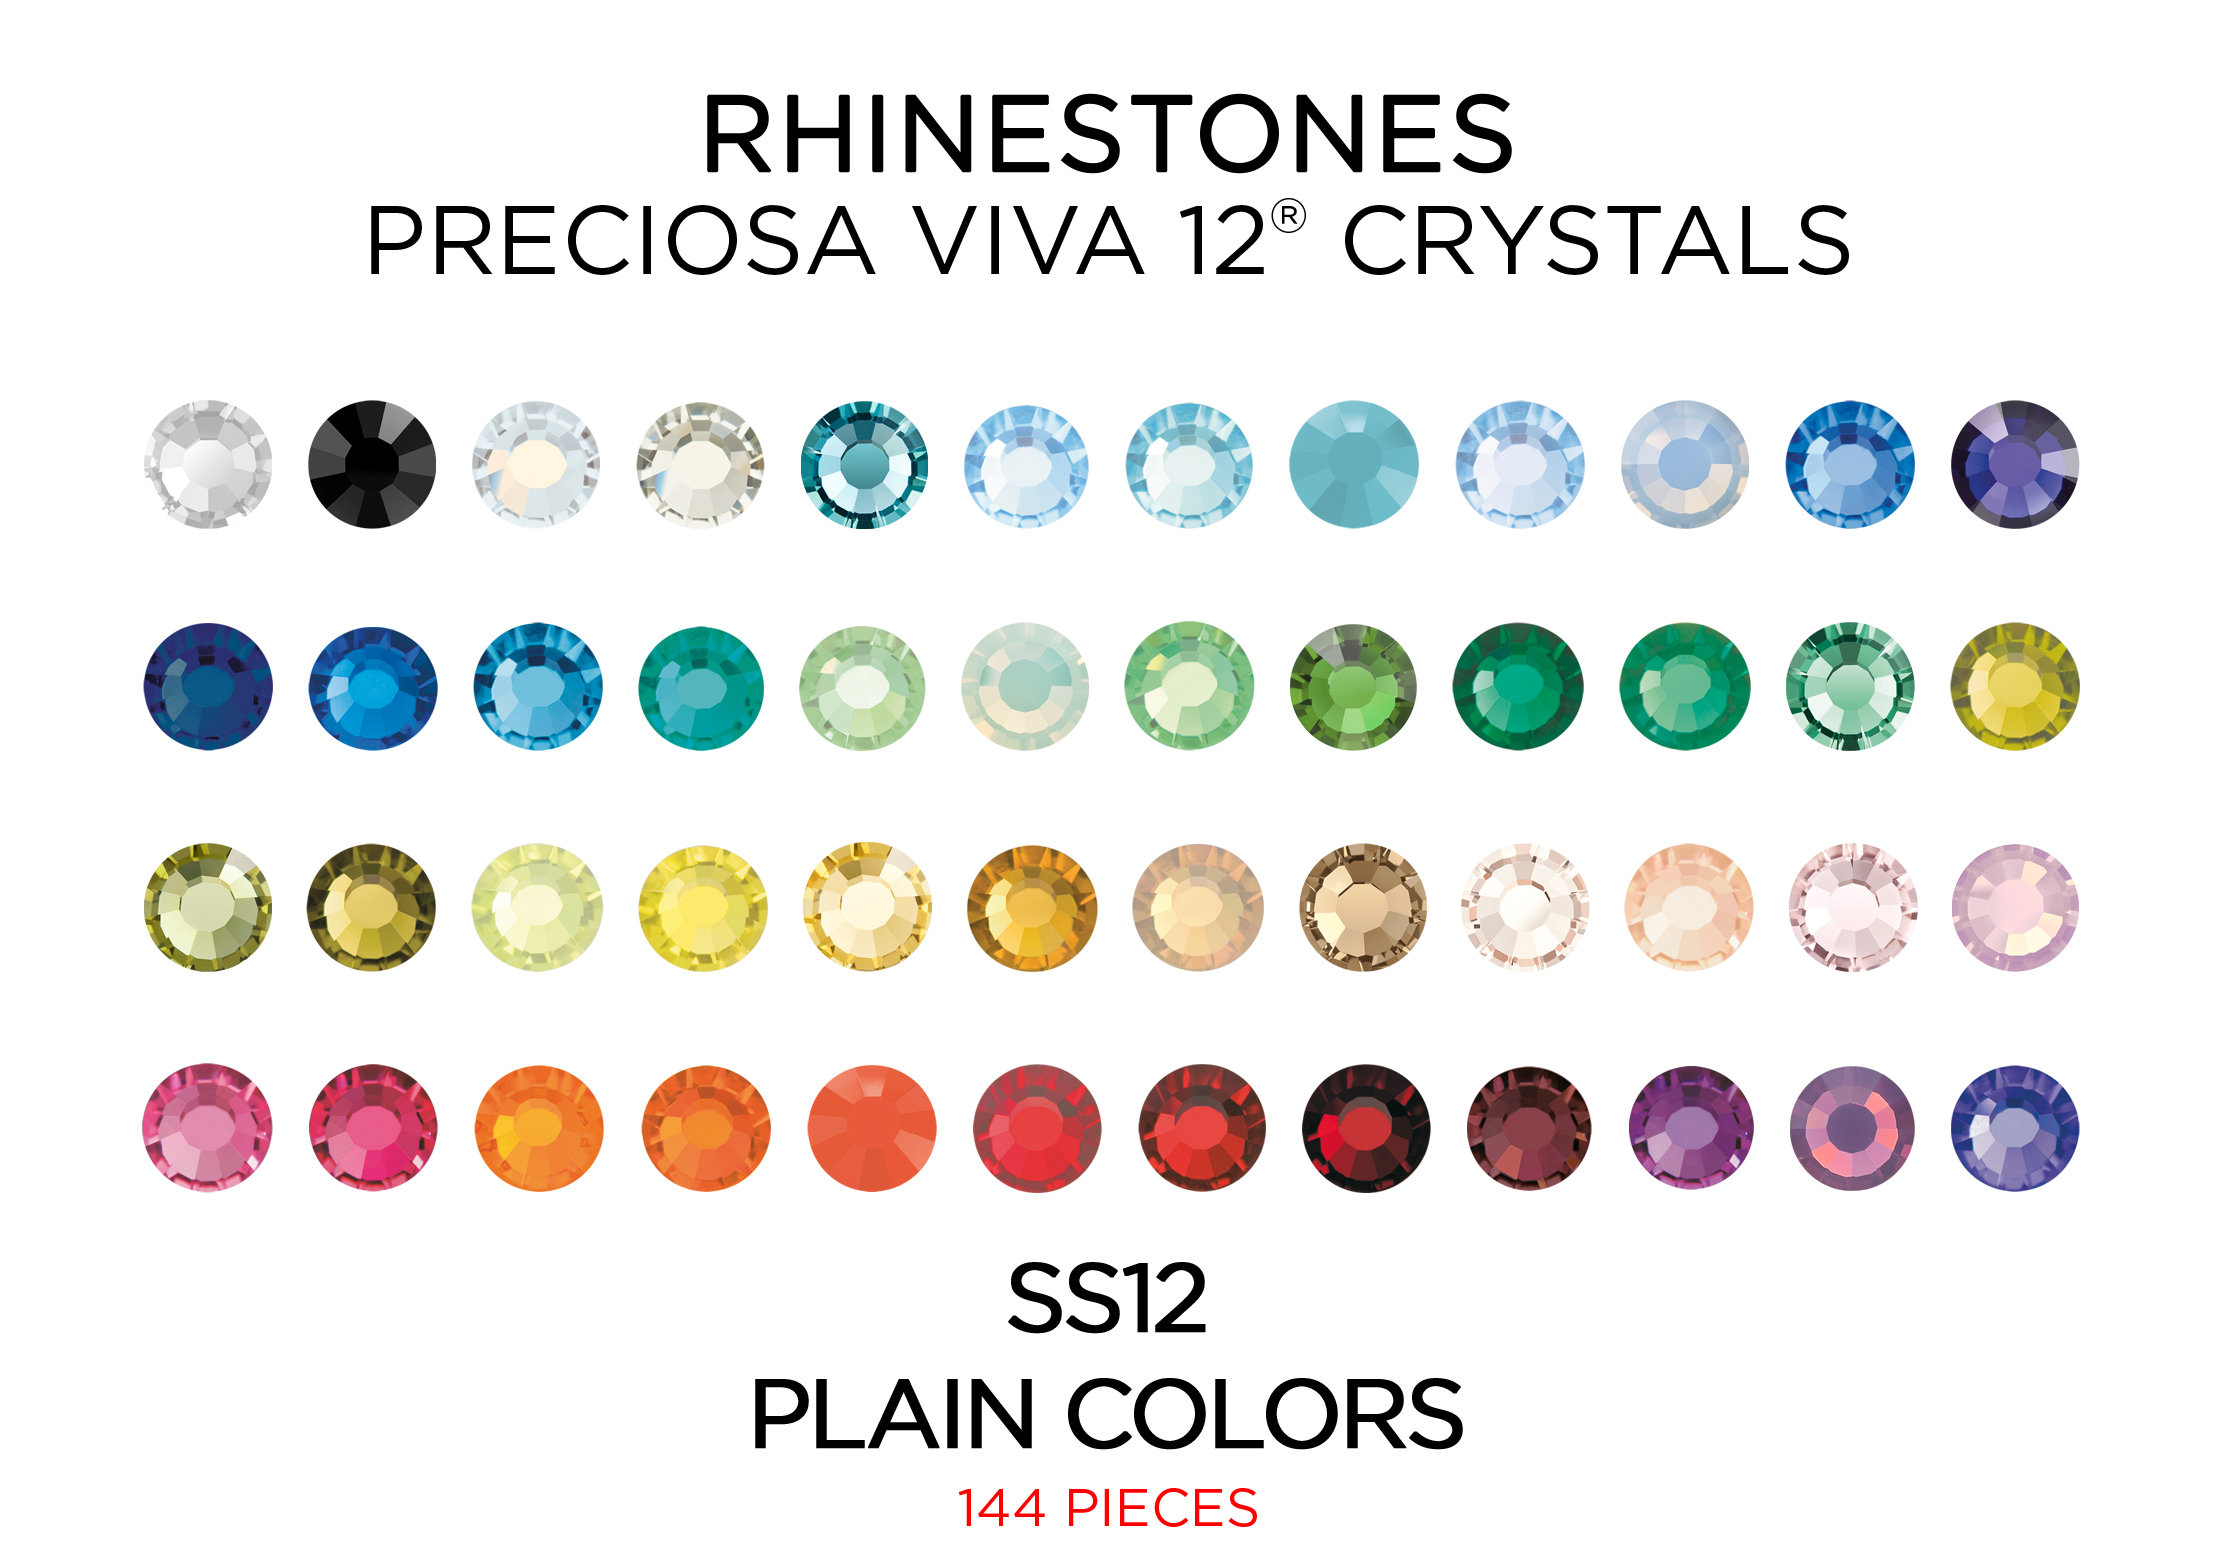 Preciosa Crystal, History of Rhinestones from Preciosa